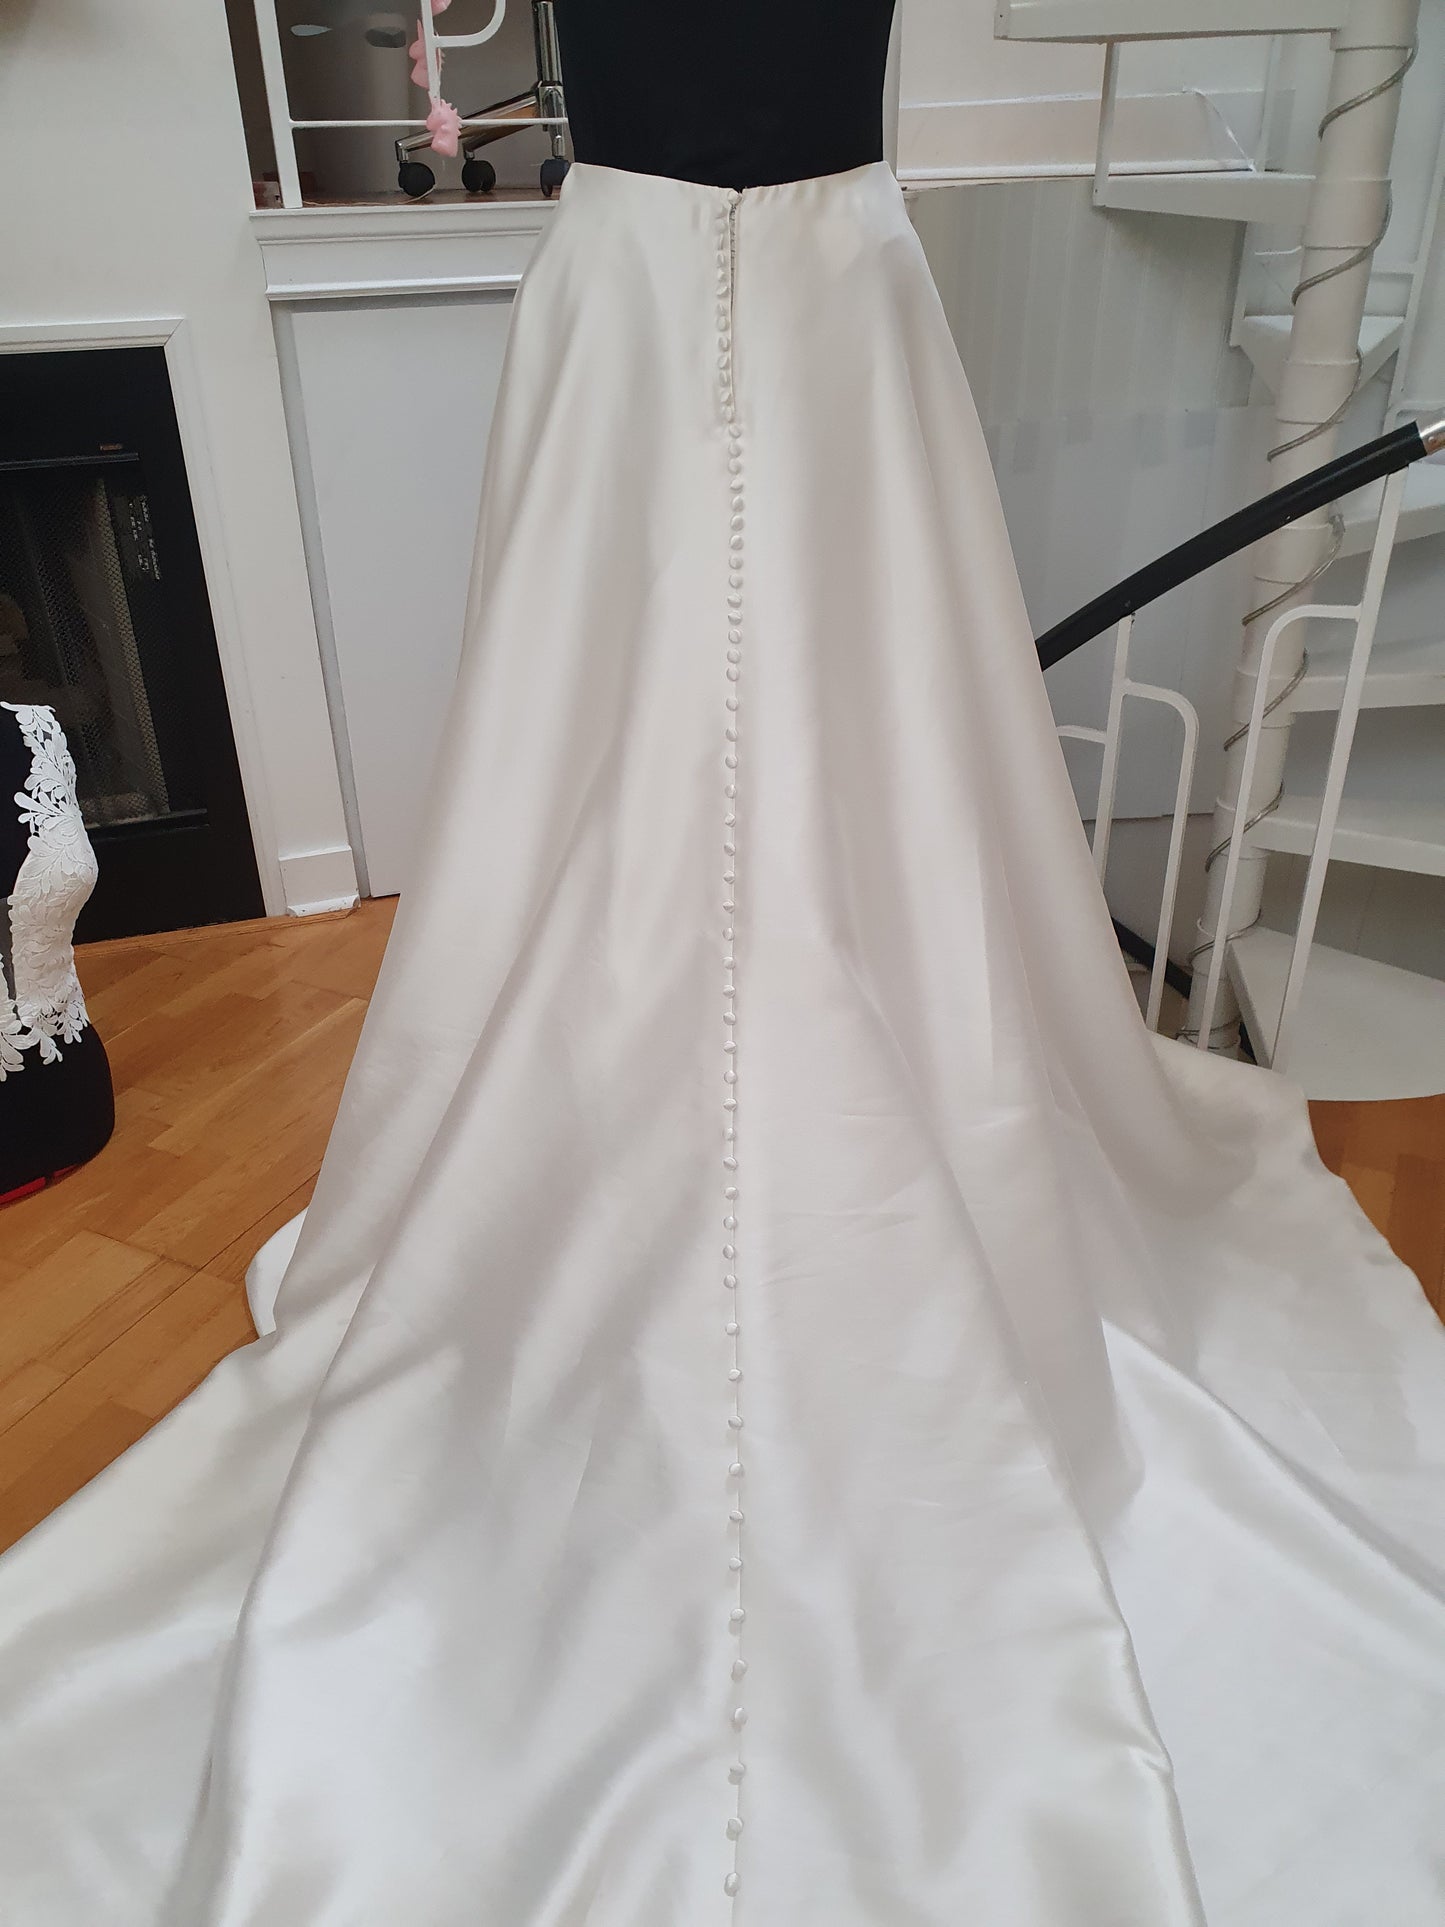 Skirt 113: EcoChic Bridal/Rebecca Ingram mikado skirt waist 31